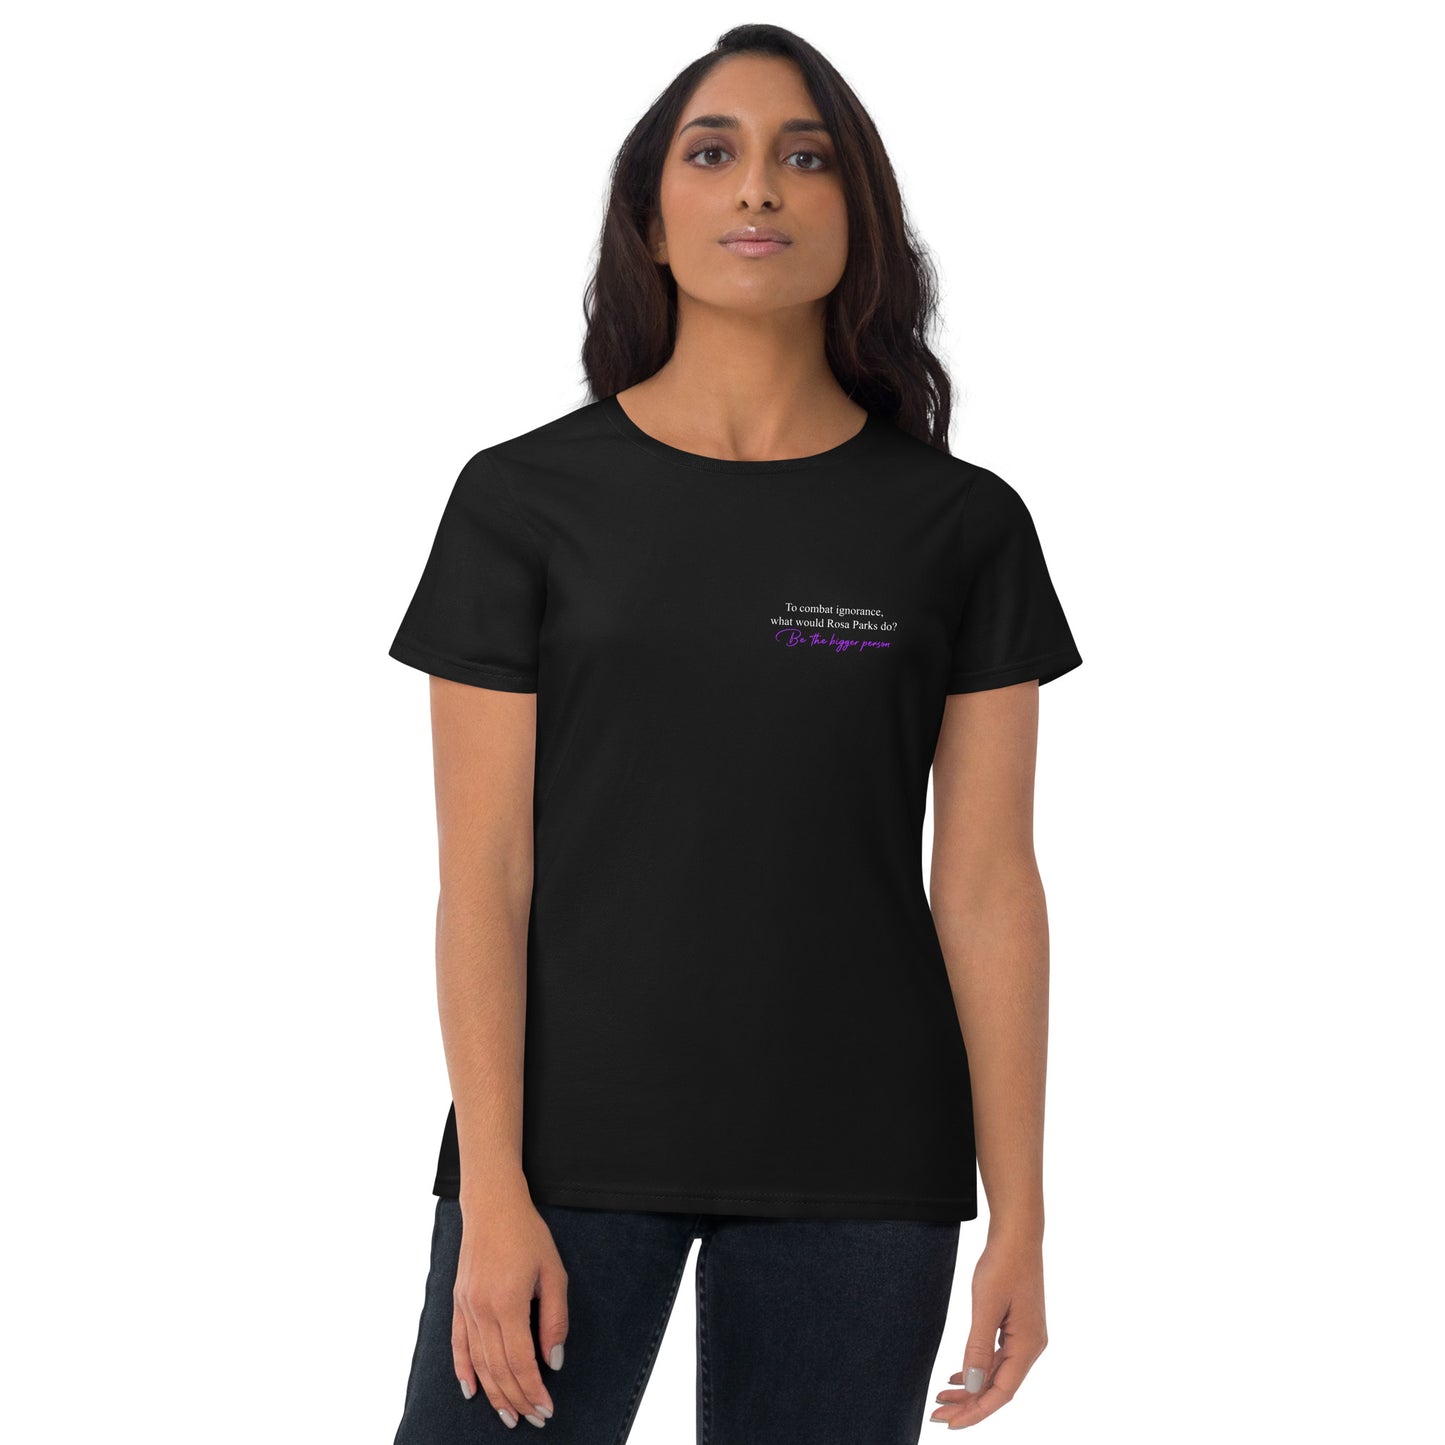 BTBP COURAGE - Women's Black T-shirt